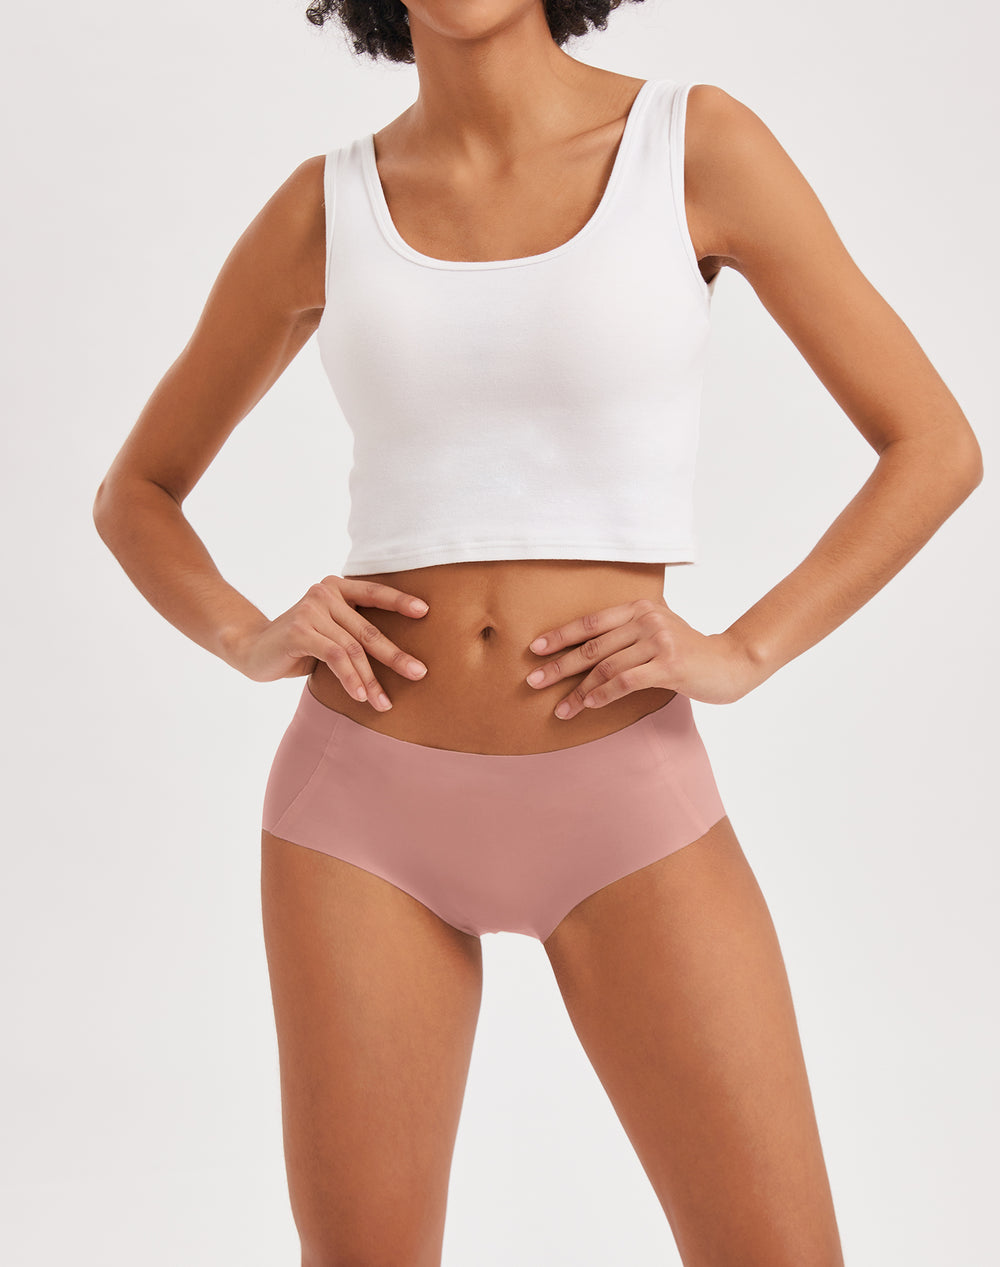 Innersy Women'S Sporty Hipster Panties Cotton Underwear